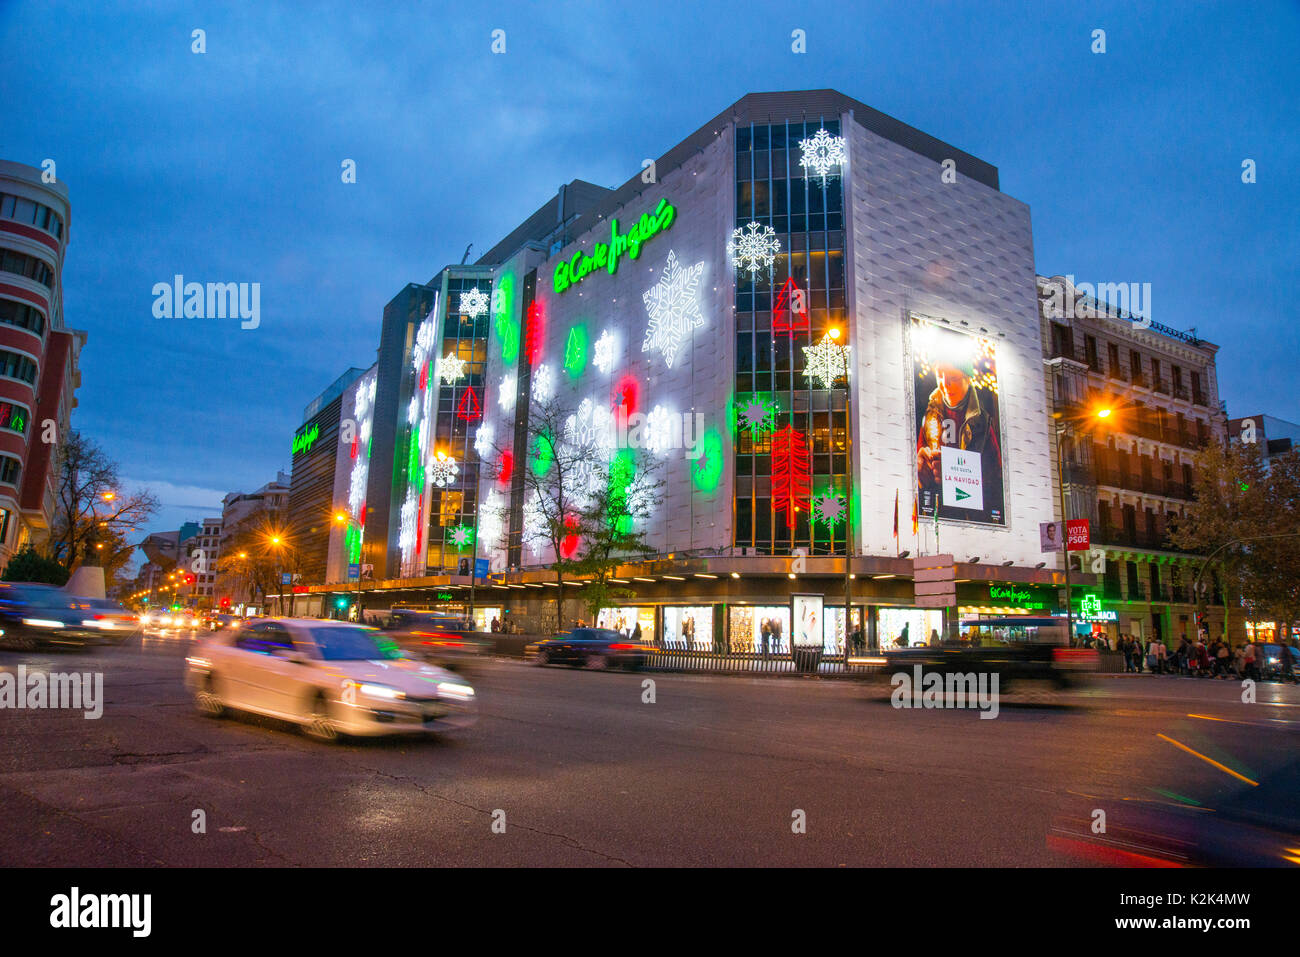 El Corte Ingles shopping center at Christmas, night view. Goya street, Madrid, Spain. Stock Photo